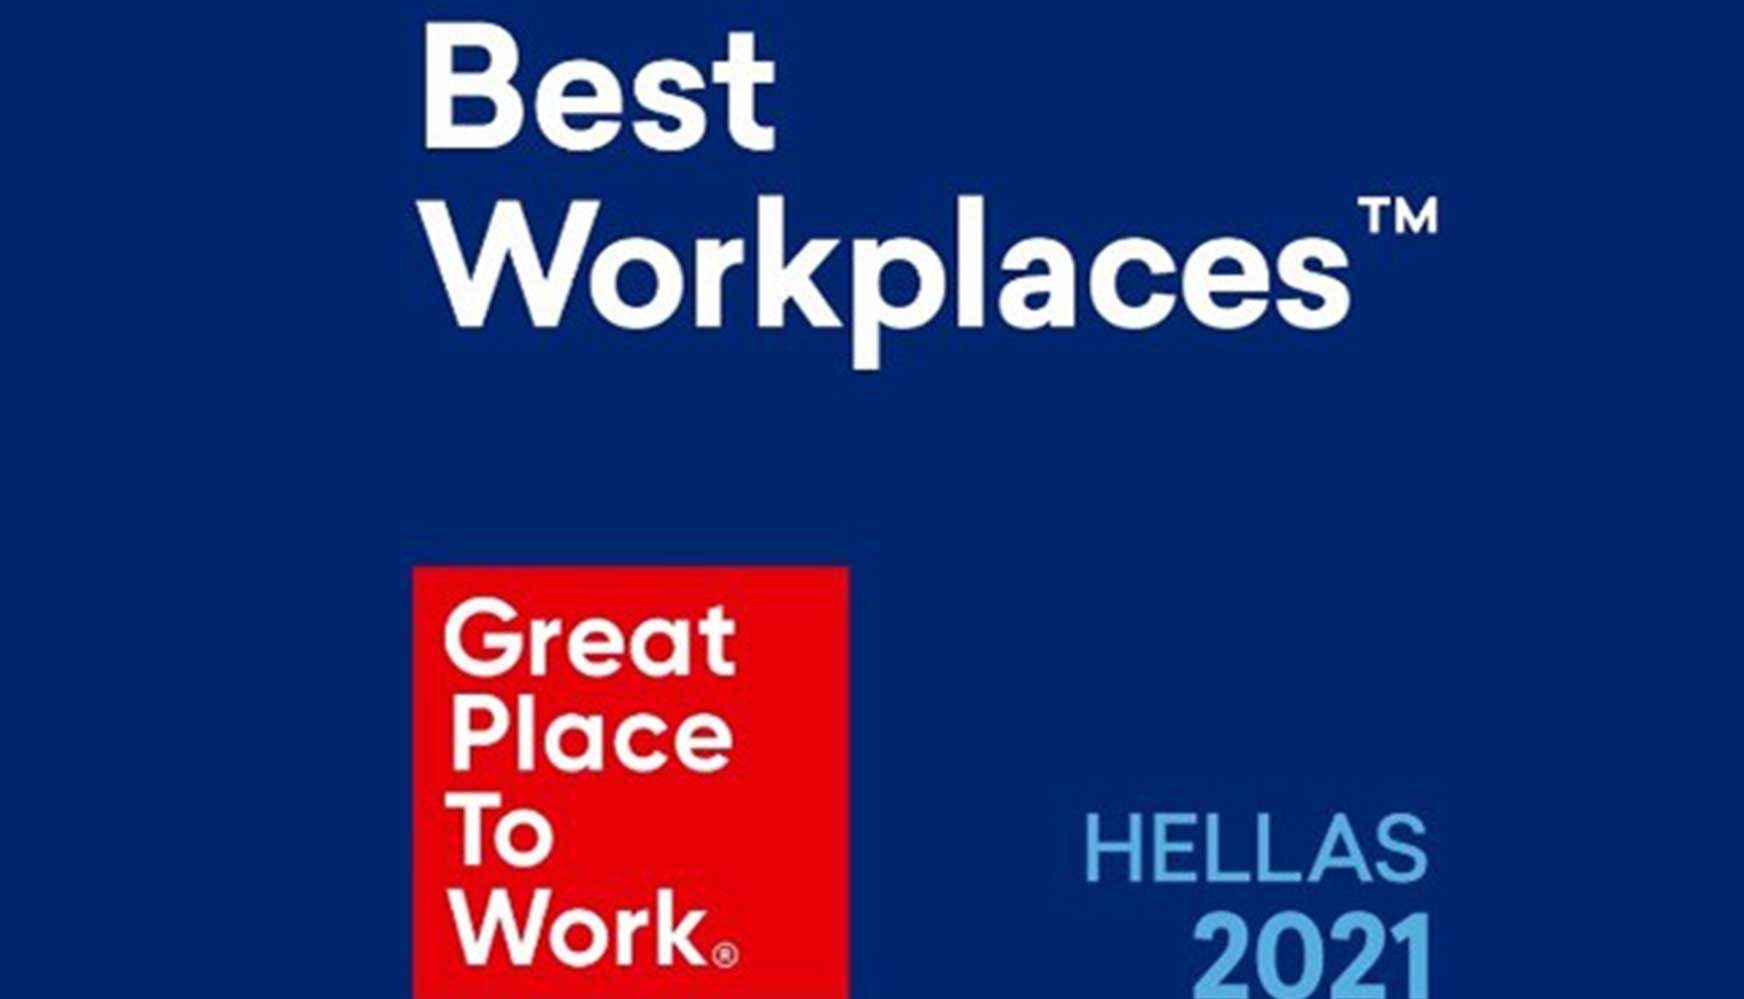 DHL Best Workplaces in Hellas - Greece 2021